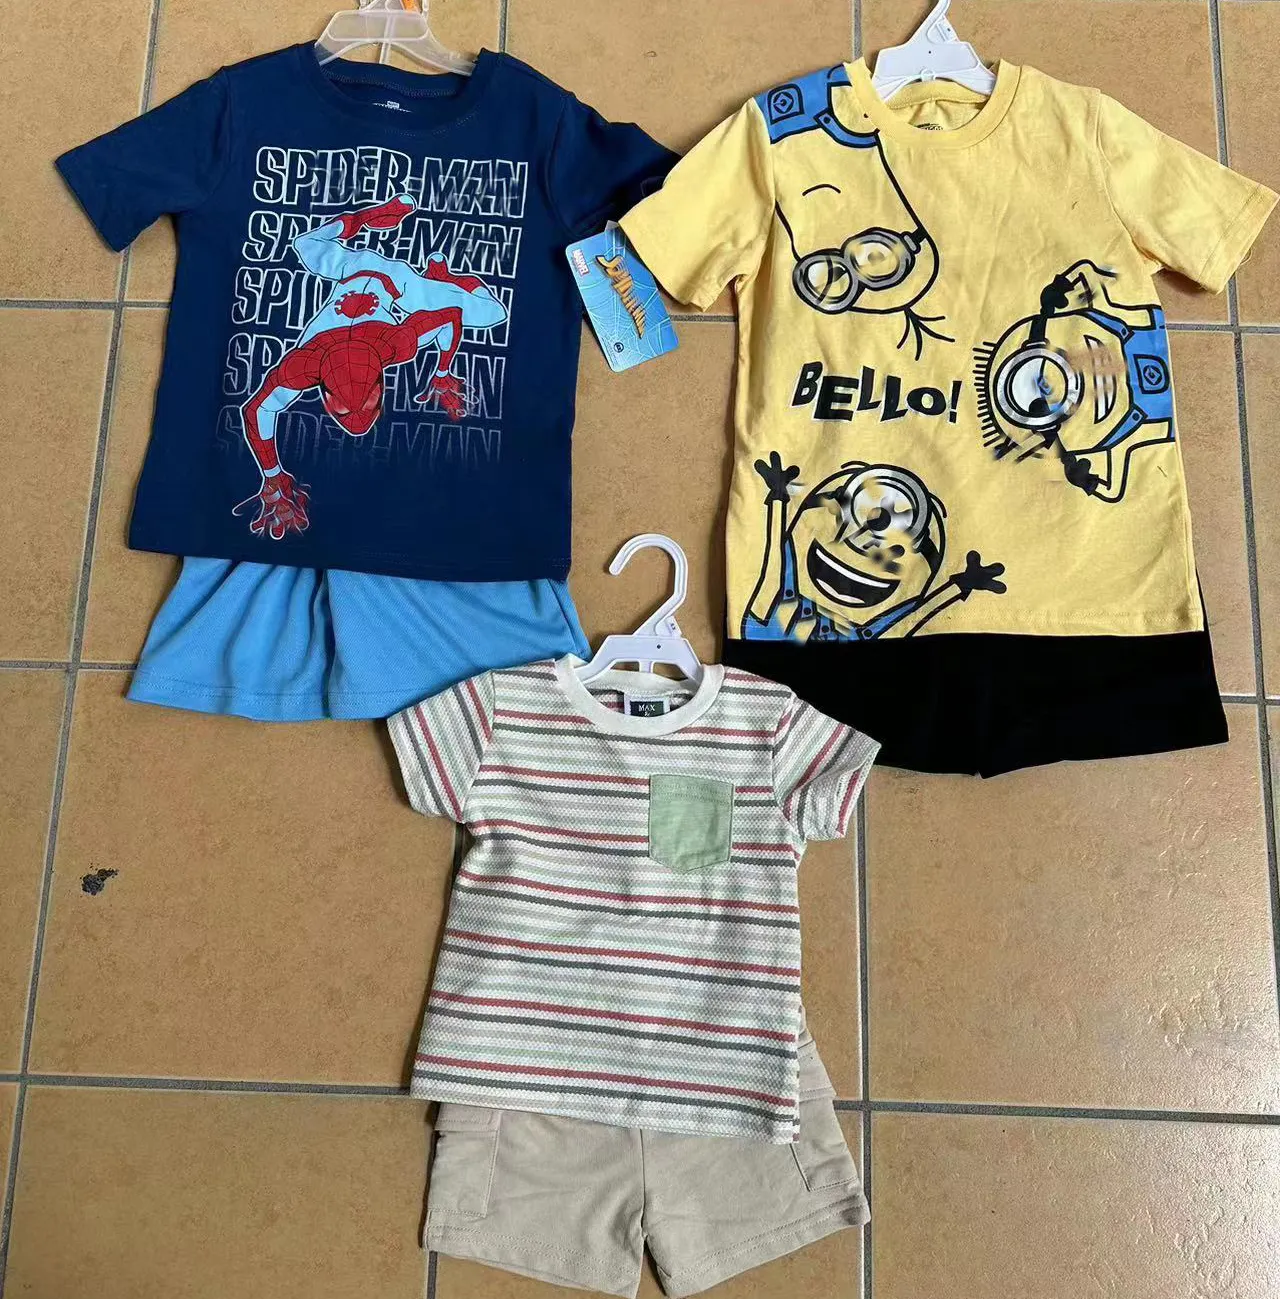 Nagelneu Großhandel Bekleidung Lager kinder Jungenkleidung Pyjama-Sets Baby-Bekleidung Terno-Set Heimkleidung